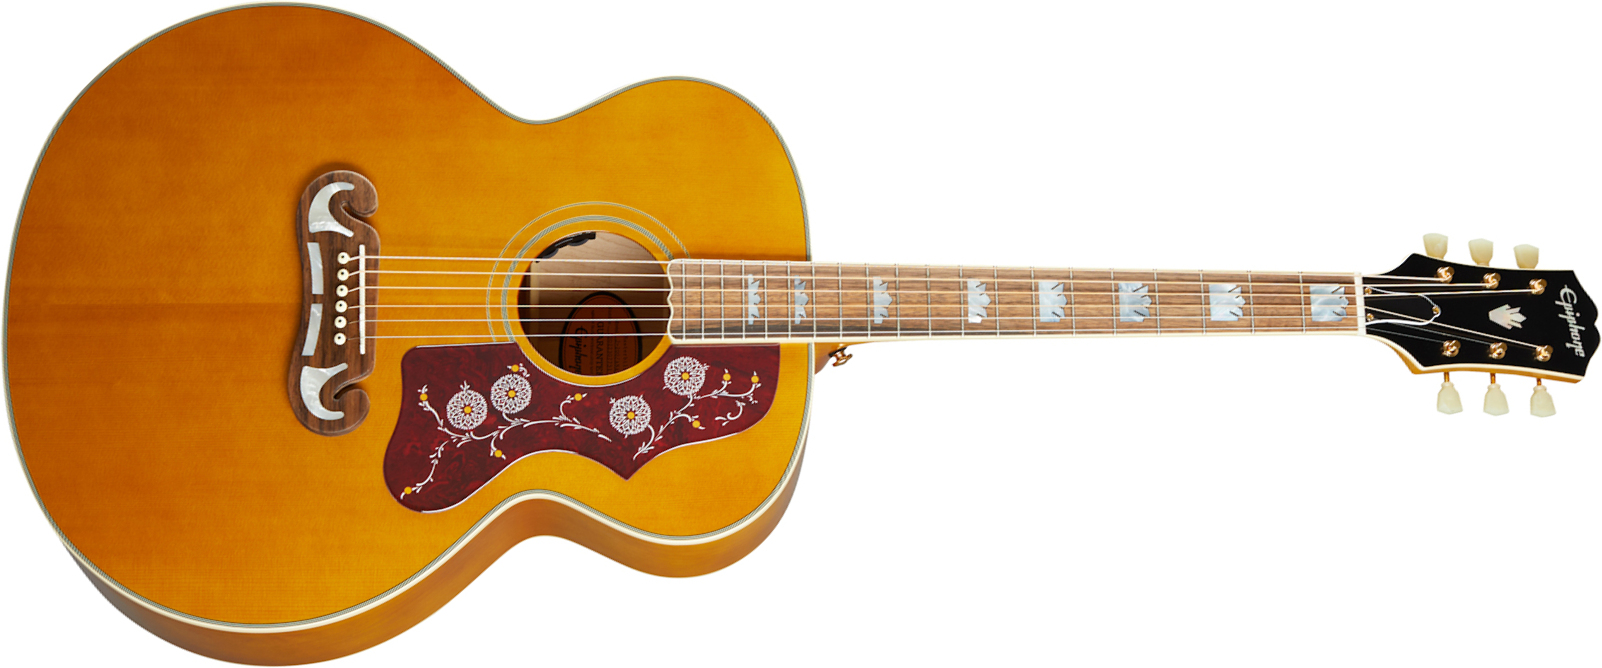 Epiphone J-200 Inspired By Gibson Jumbo Epicea Erable Lau - Aged Antique Natural - Elektro-akoestische gitaar - Main picture